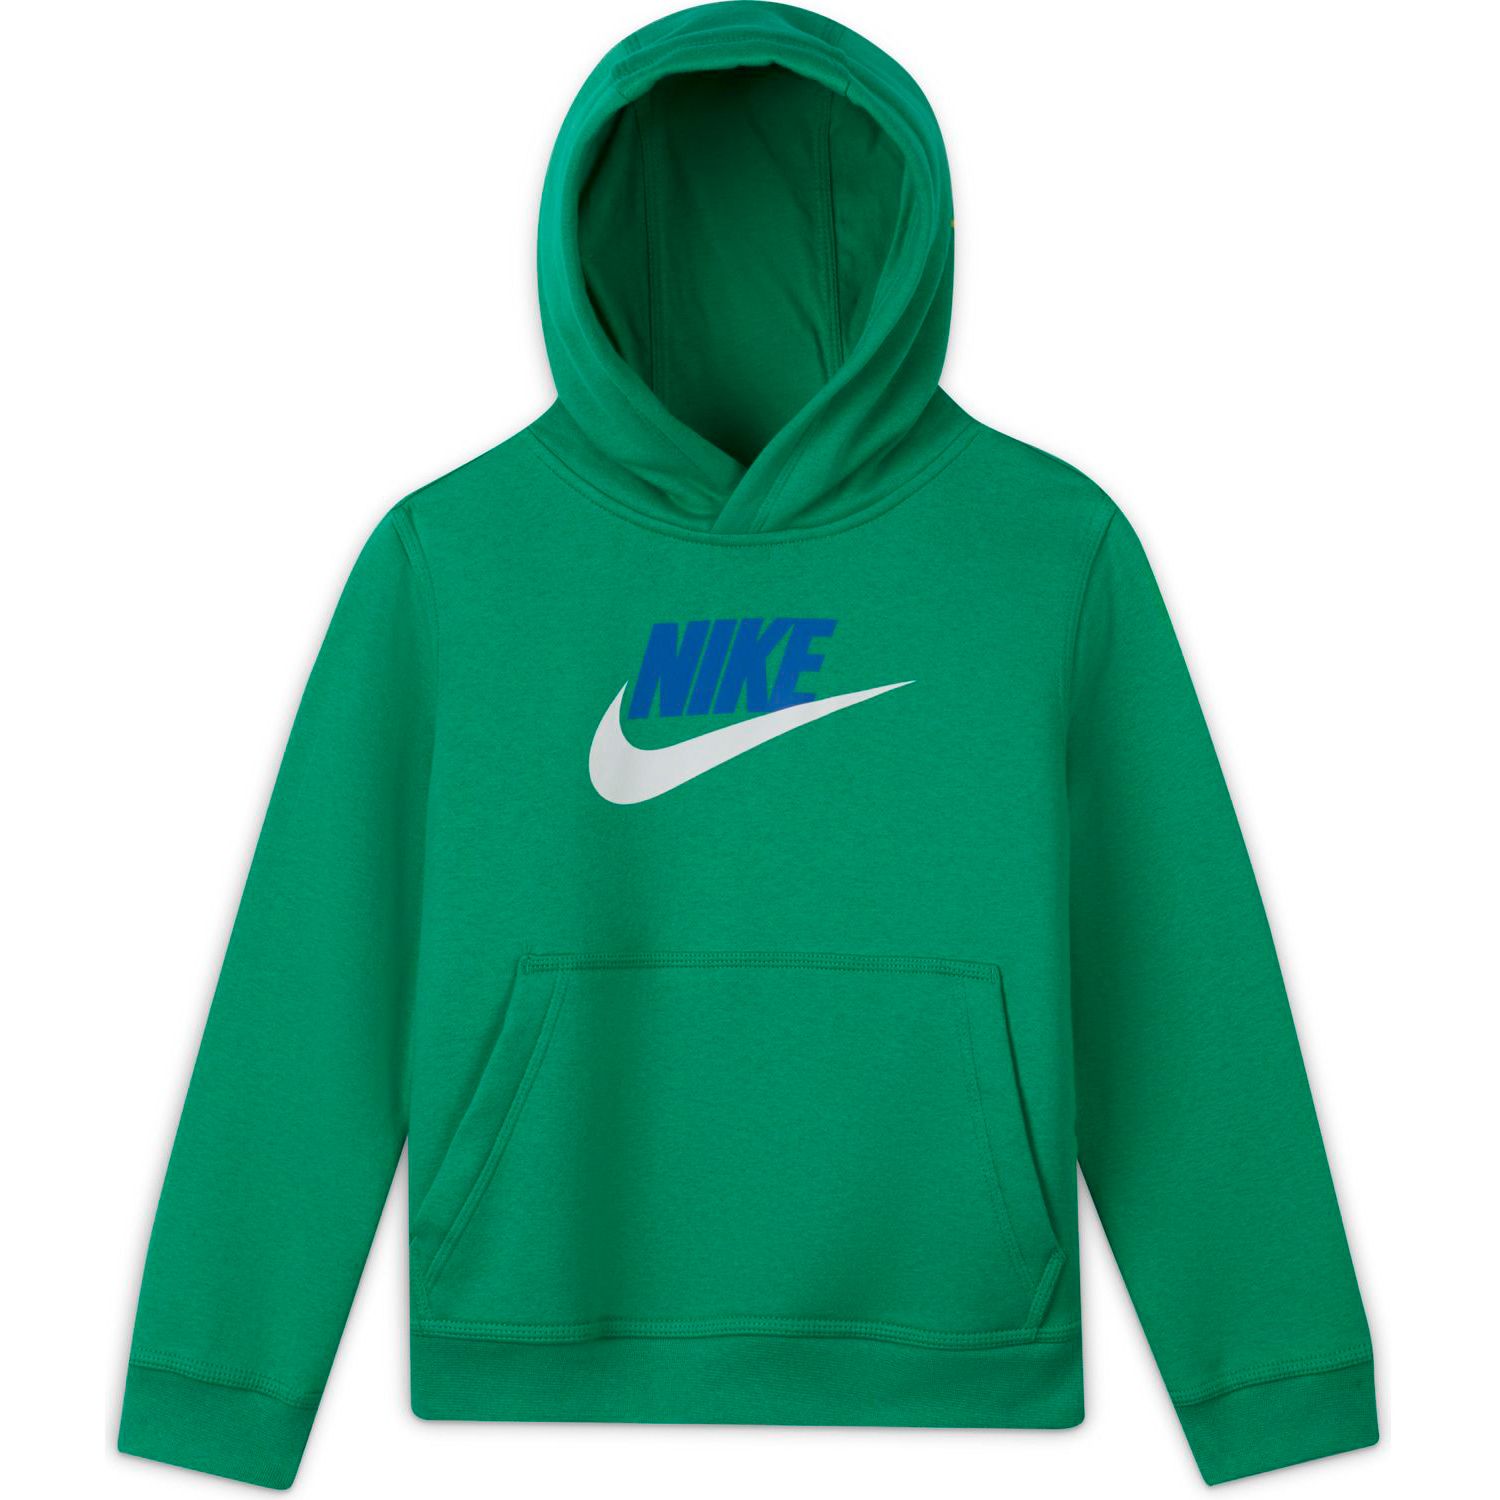 nike green hoodie women's